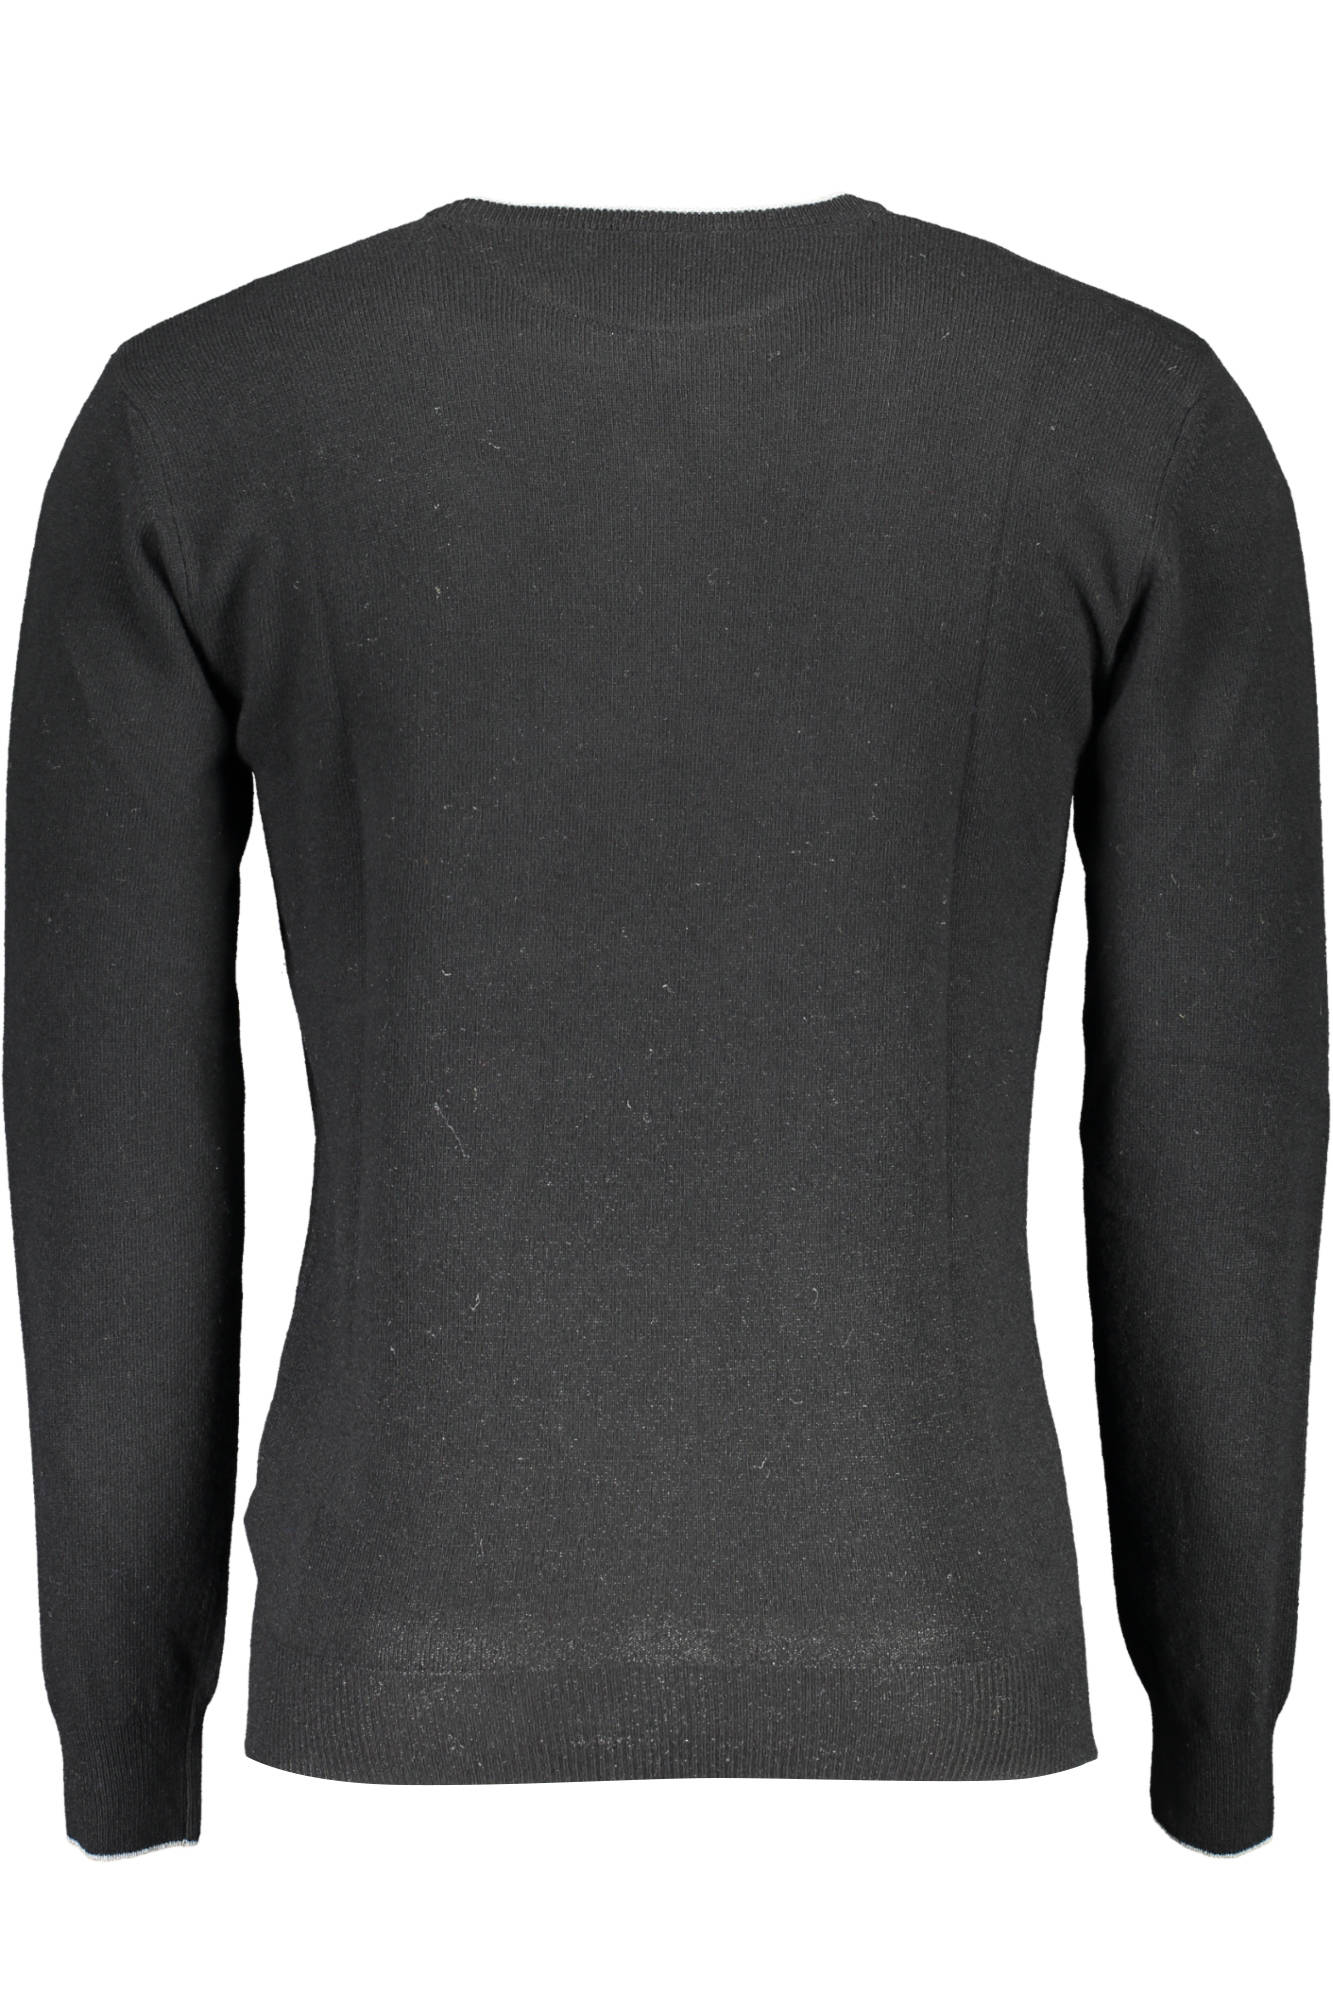 U.S. POLO ASSN. Black Sweater - Fizigo